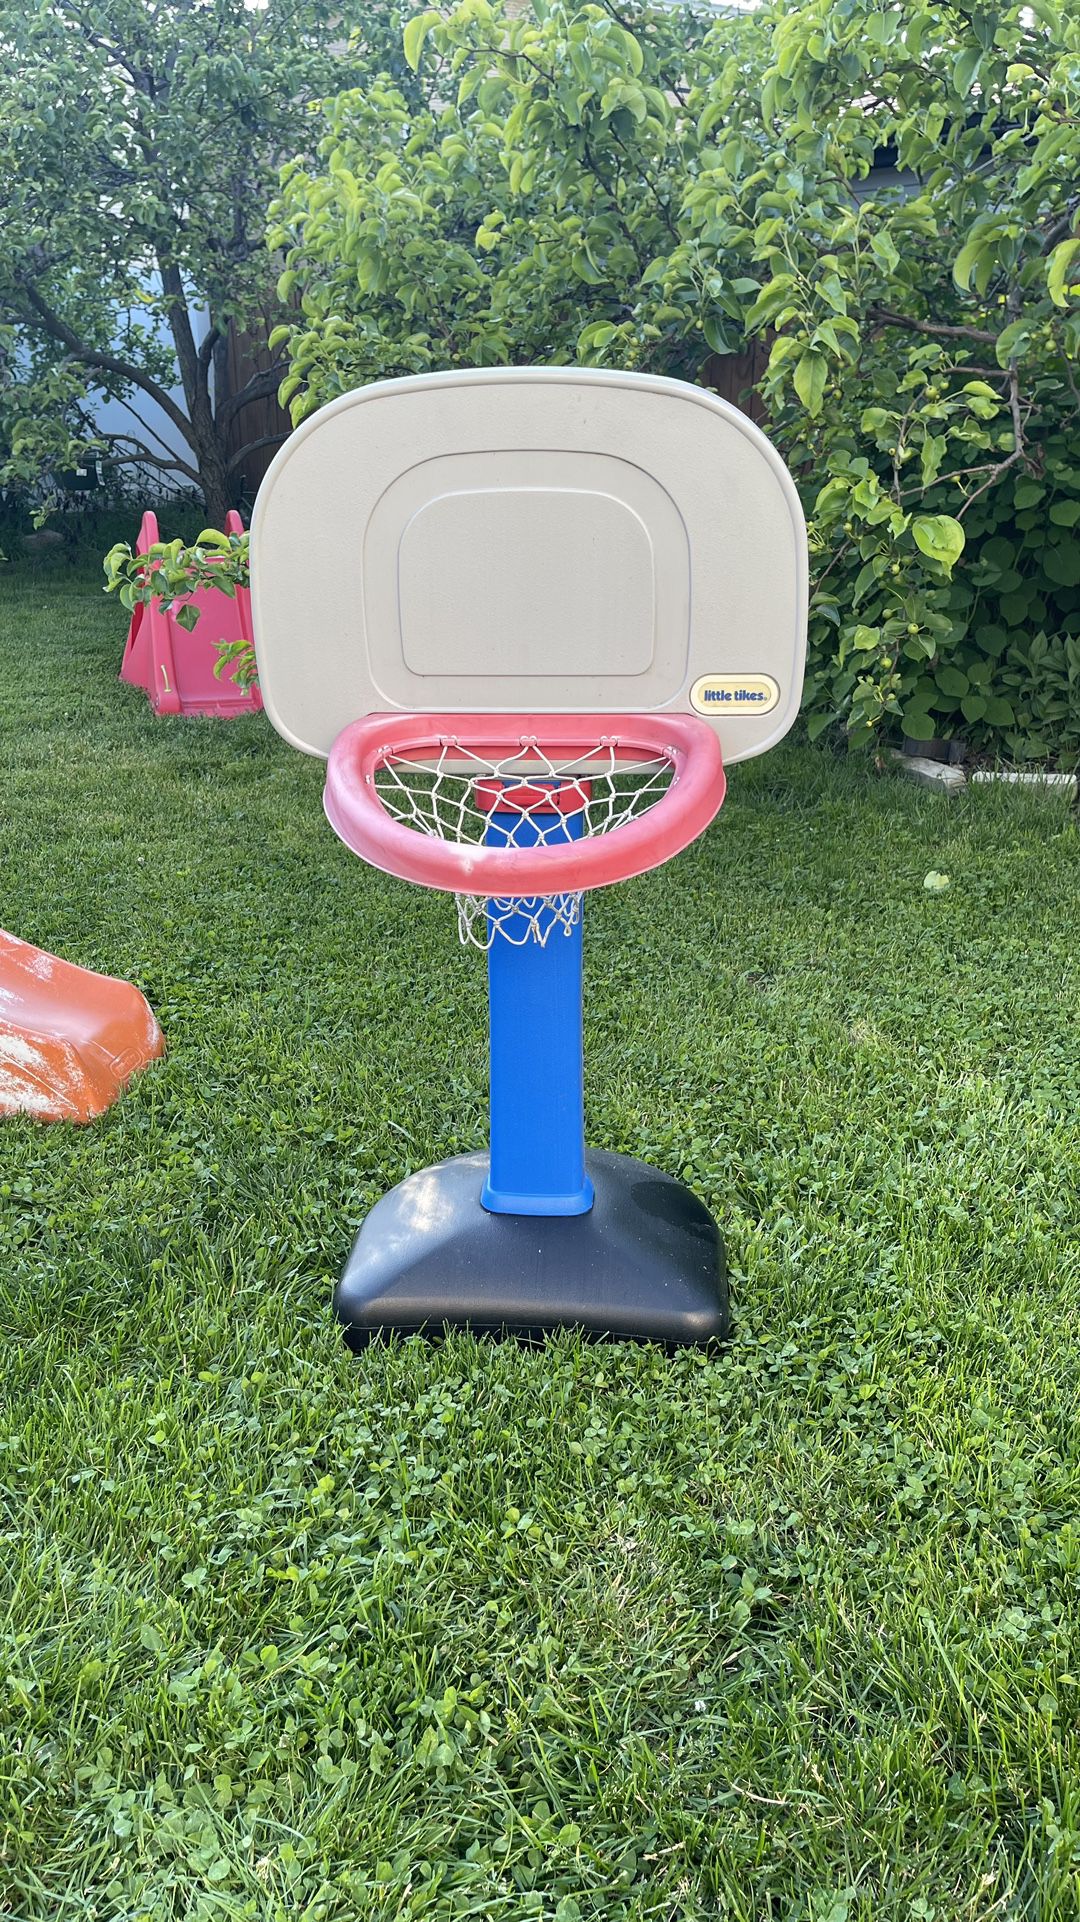 Little Tikes Basketball Hoop Ask $5 